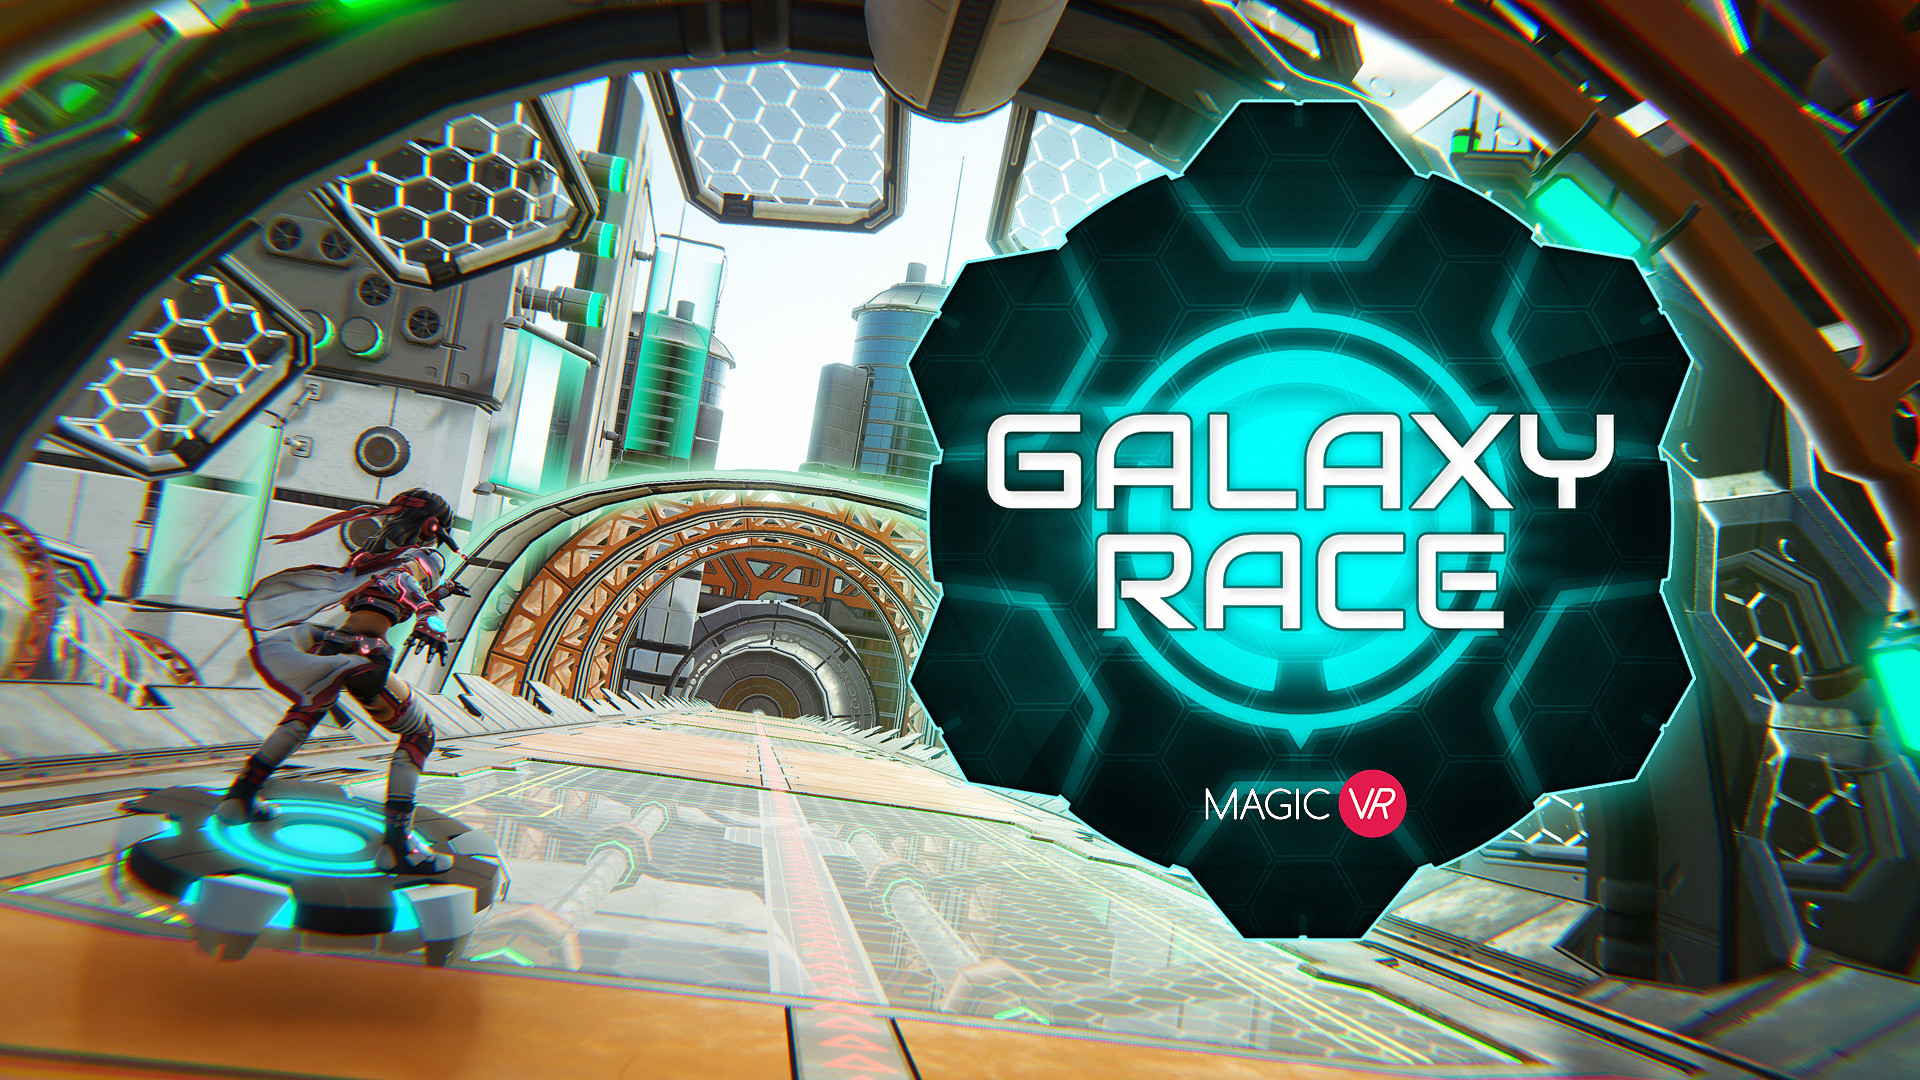 Magic vr. Stone Magic VR. Race for the Galaxy. Battle Magic VR.